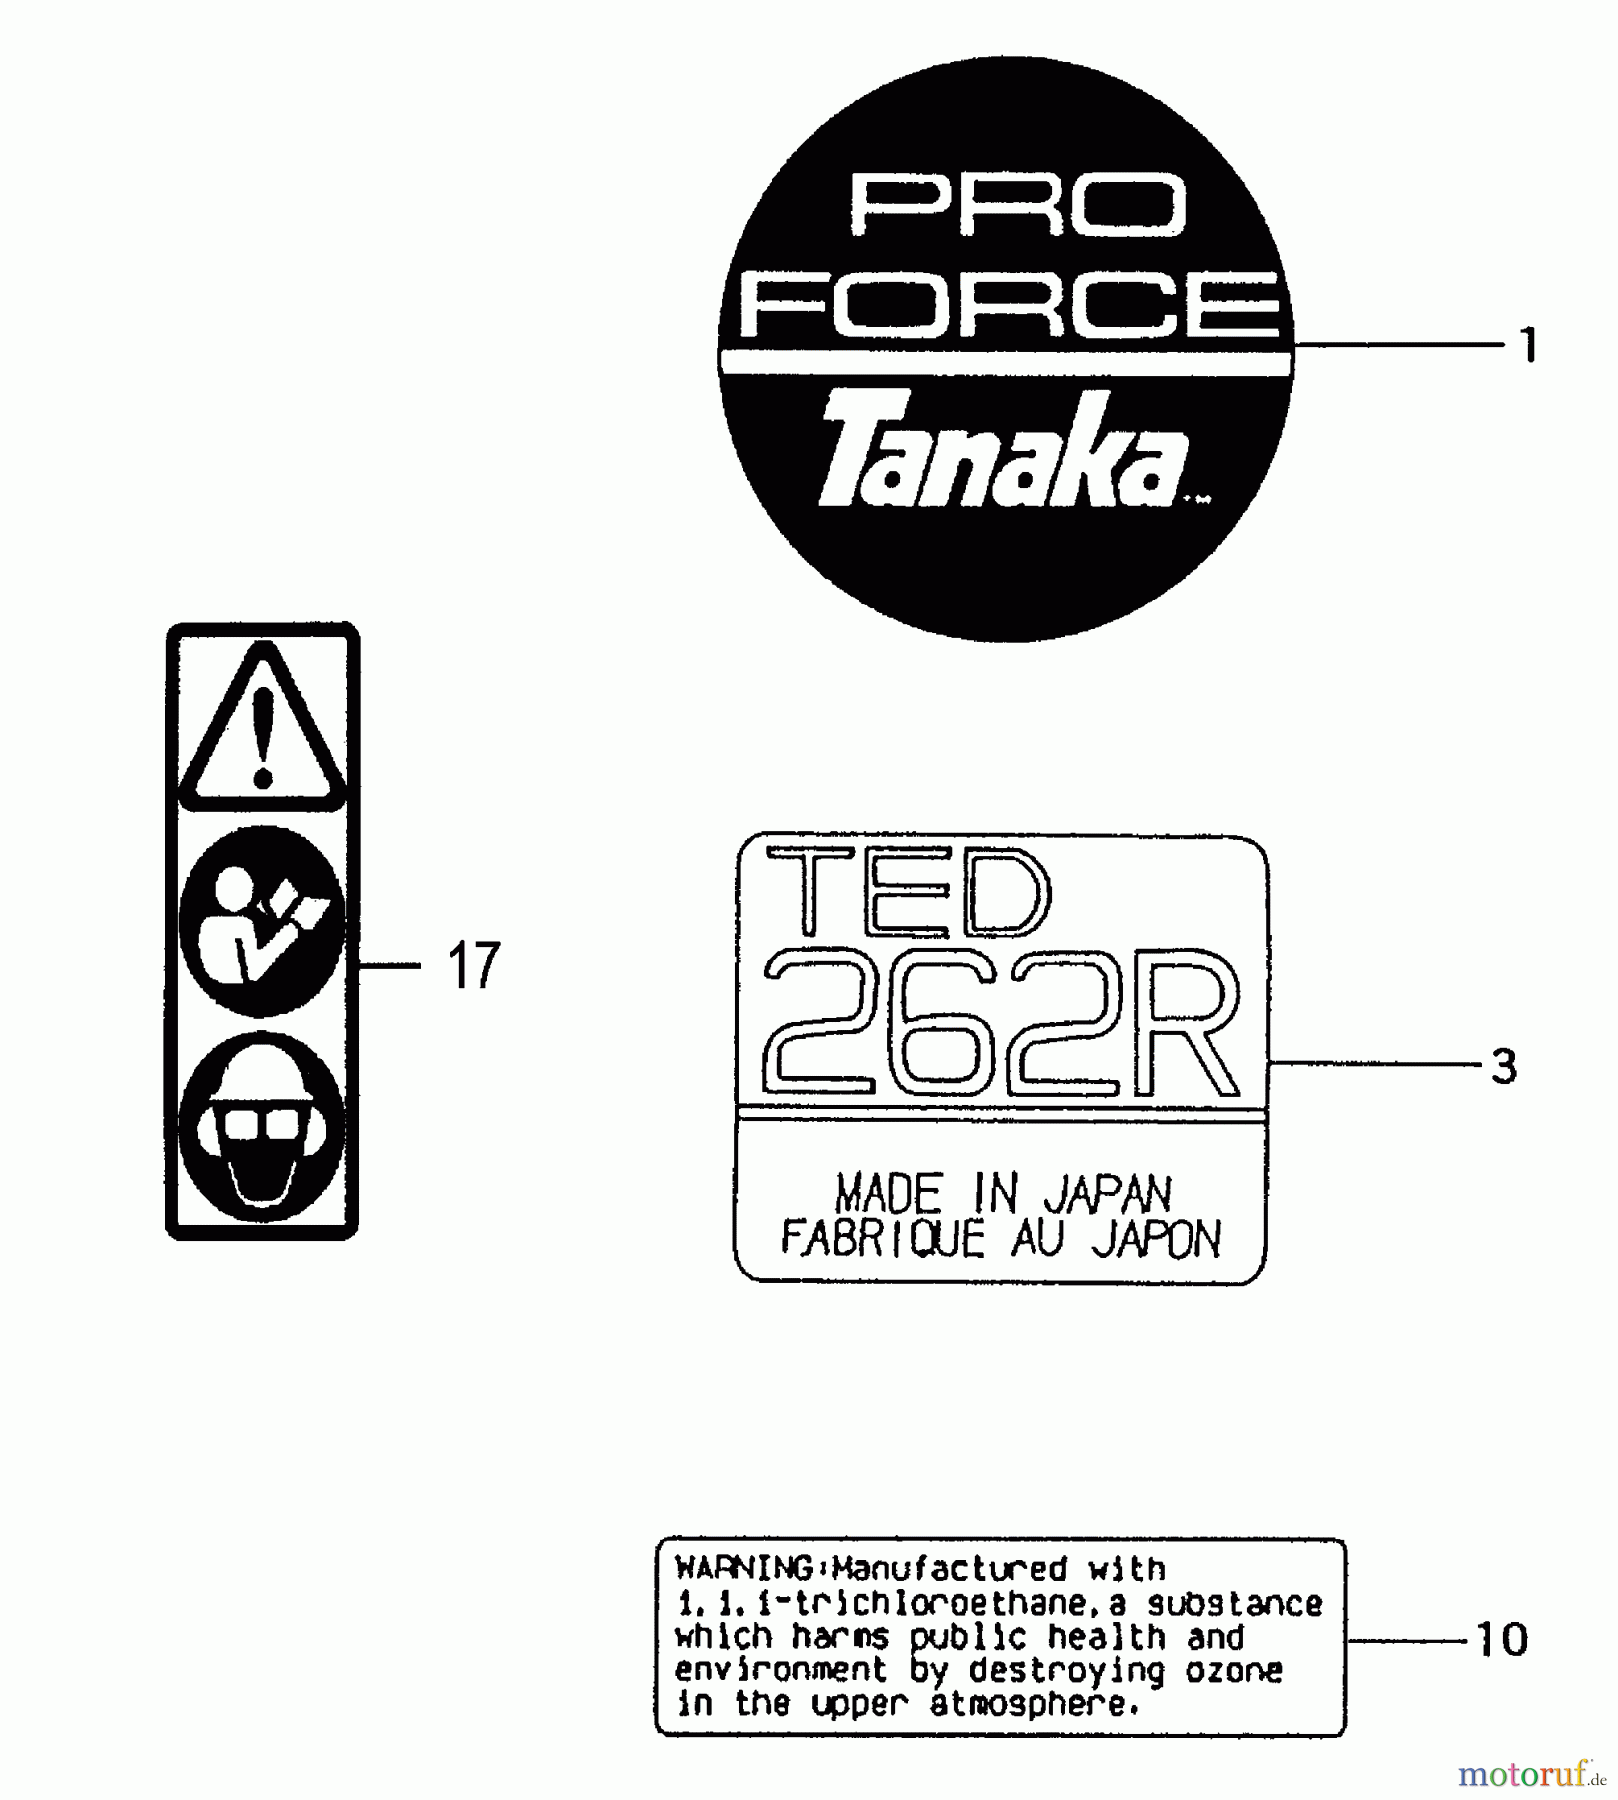  Tanaka Erdbohrer TED-262R - Tanaka Engine Drill W/Reverse Decals